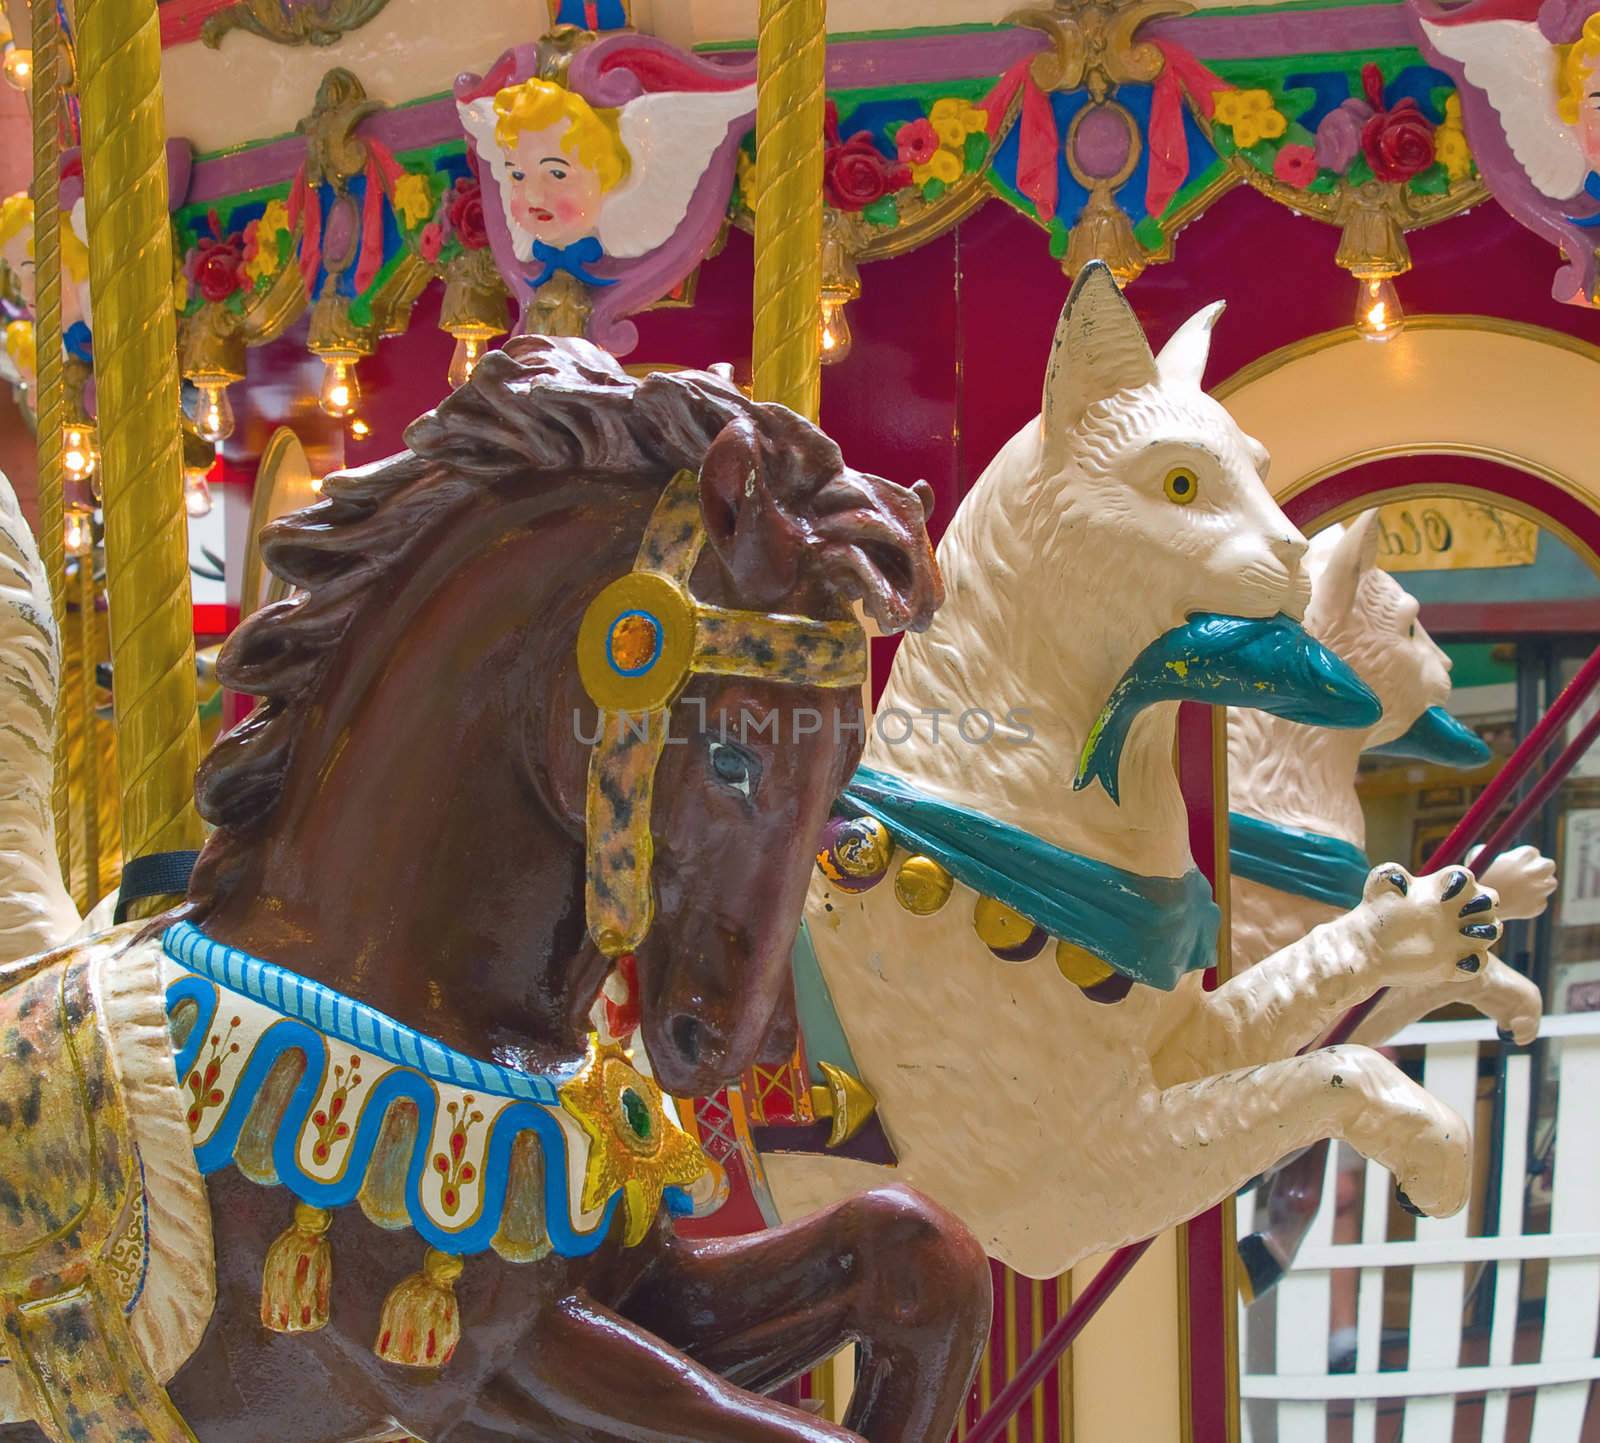 Carousel animals on an indoor amusement ride